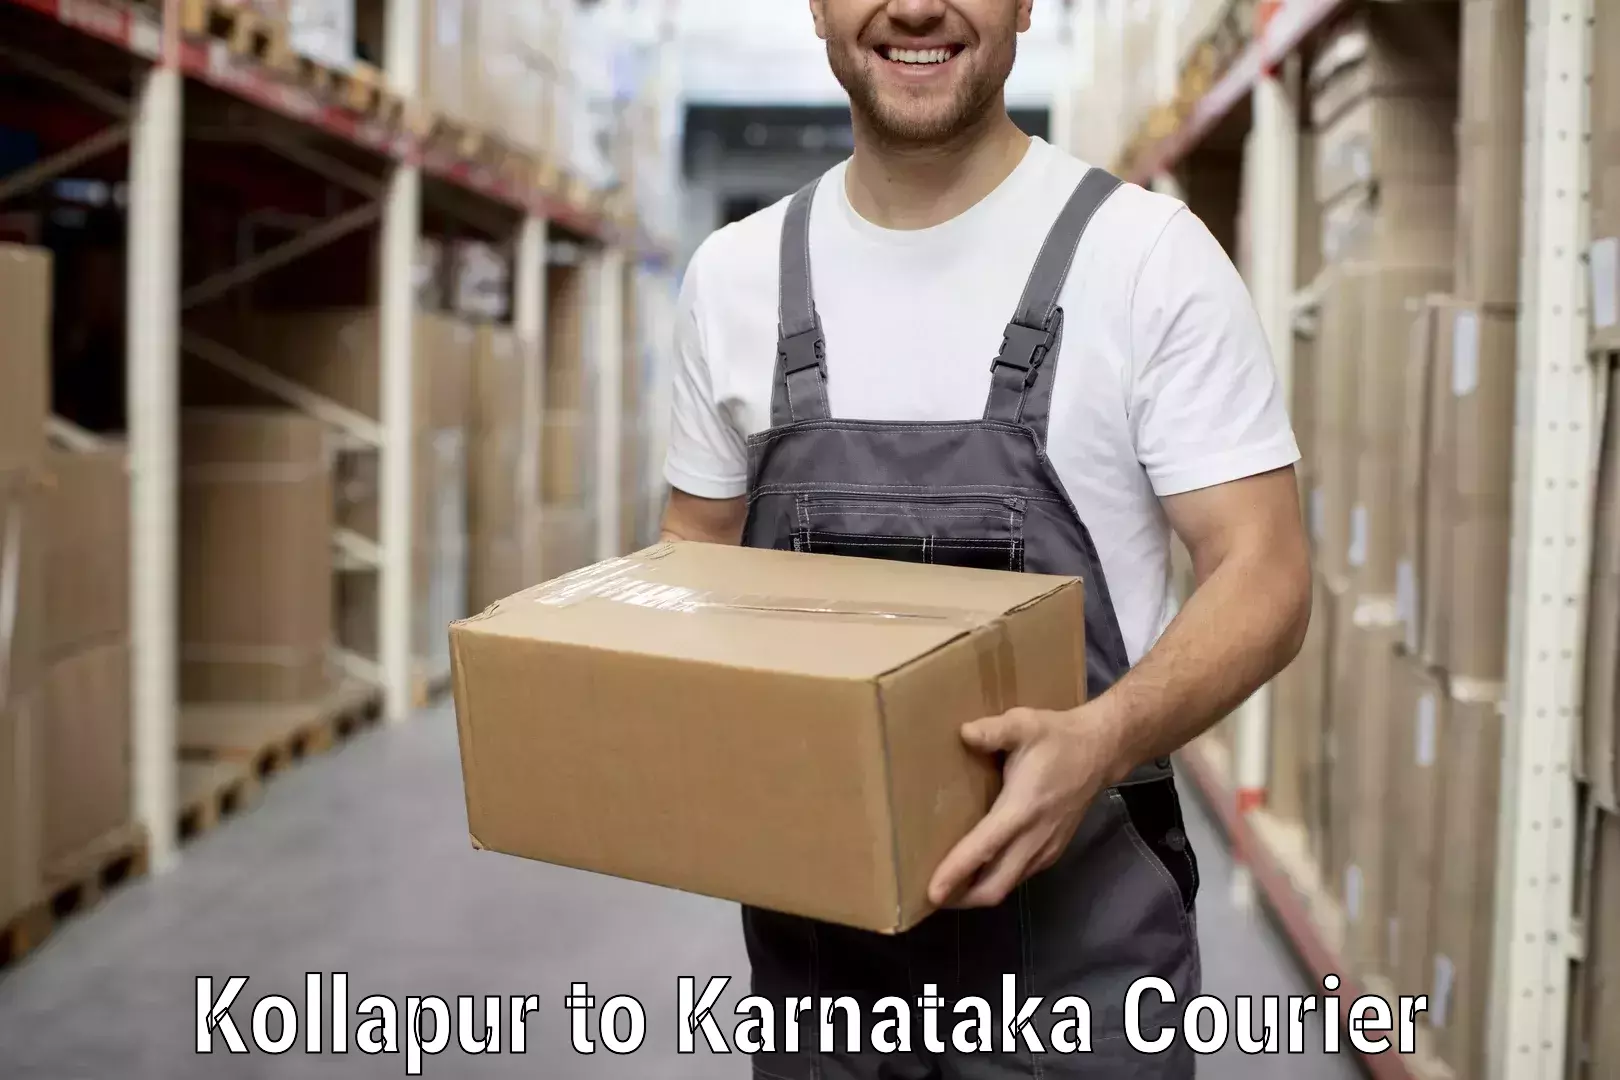 Professional moving company Kollapur to Davangere